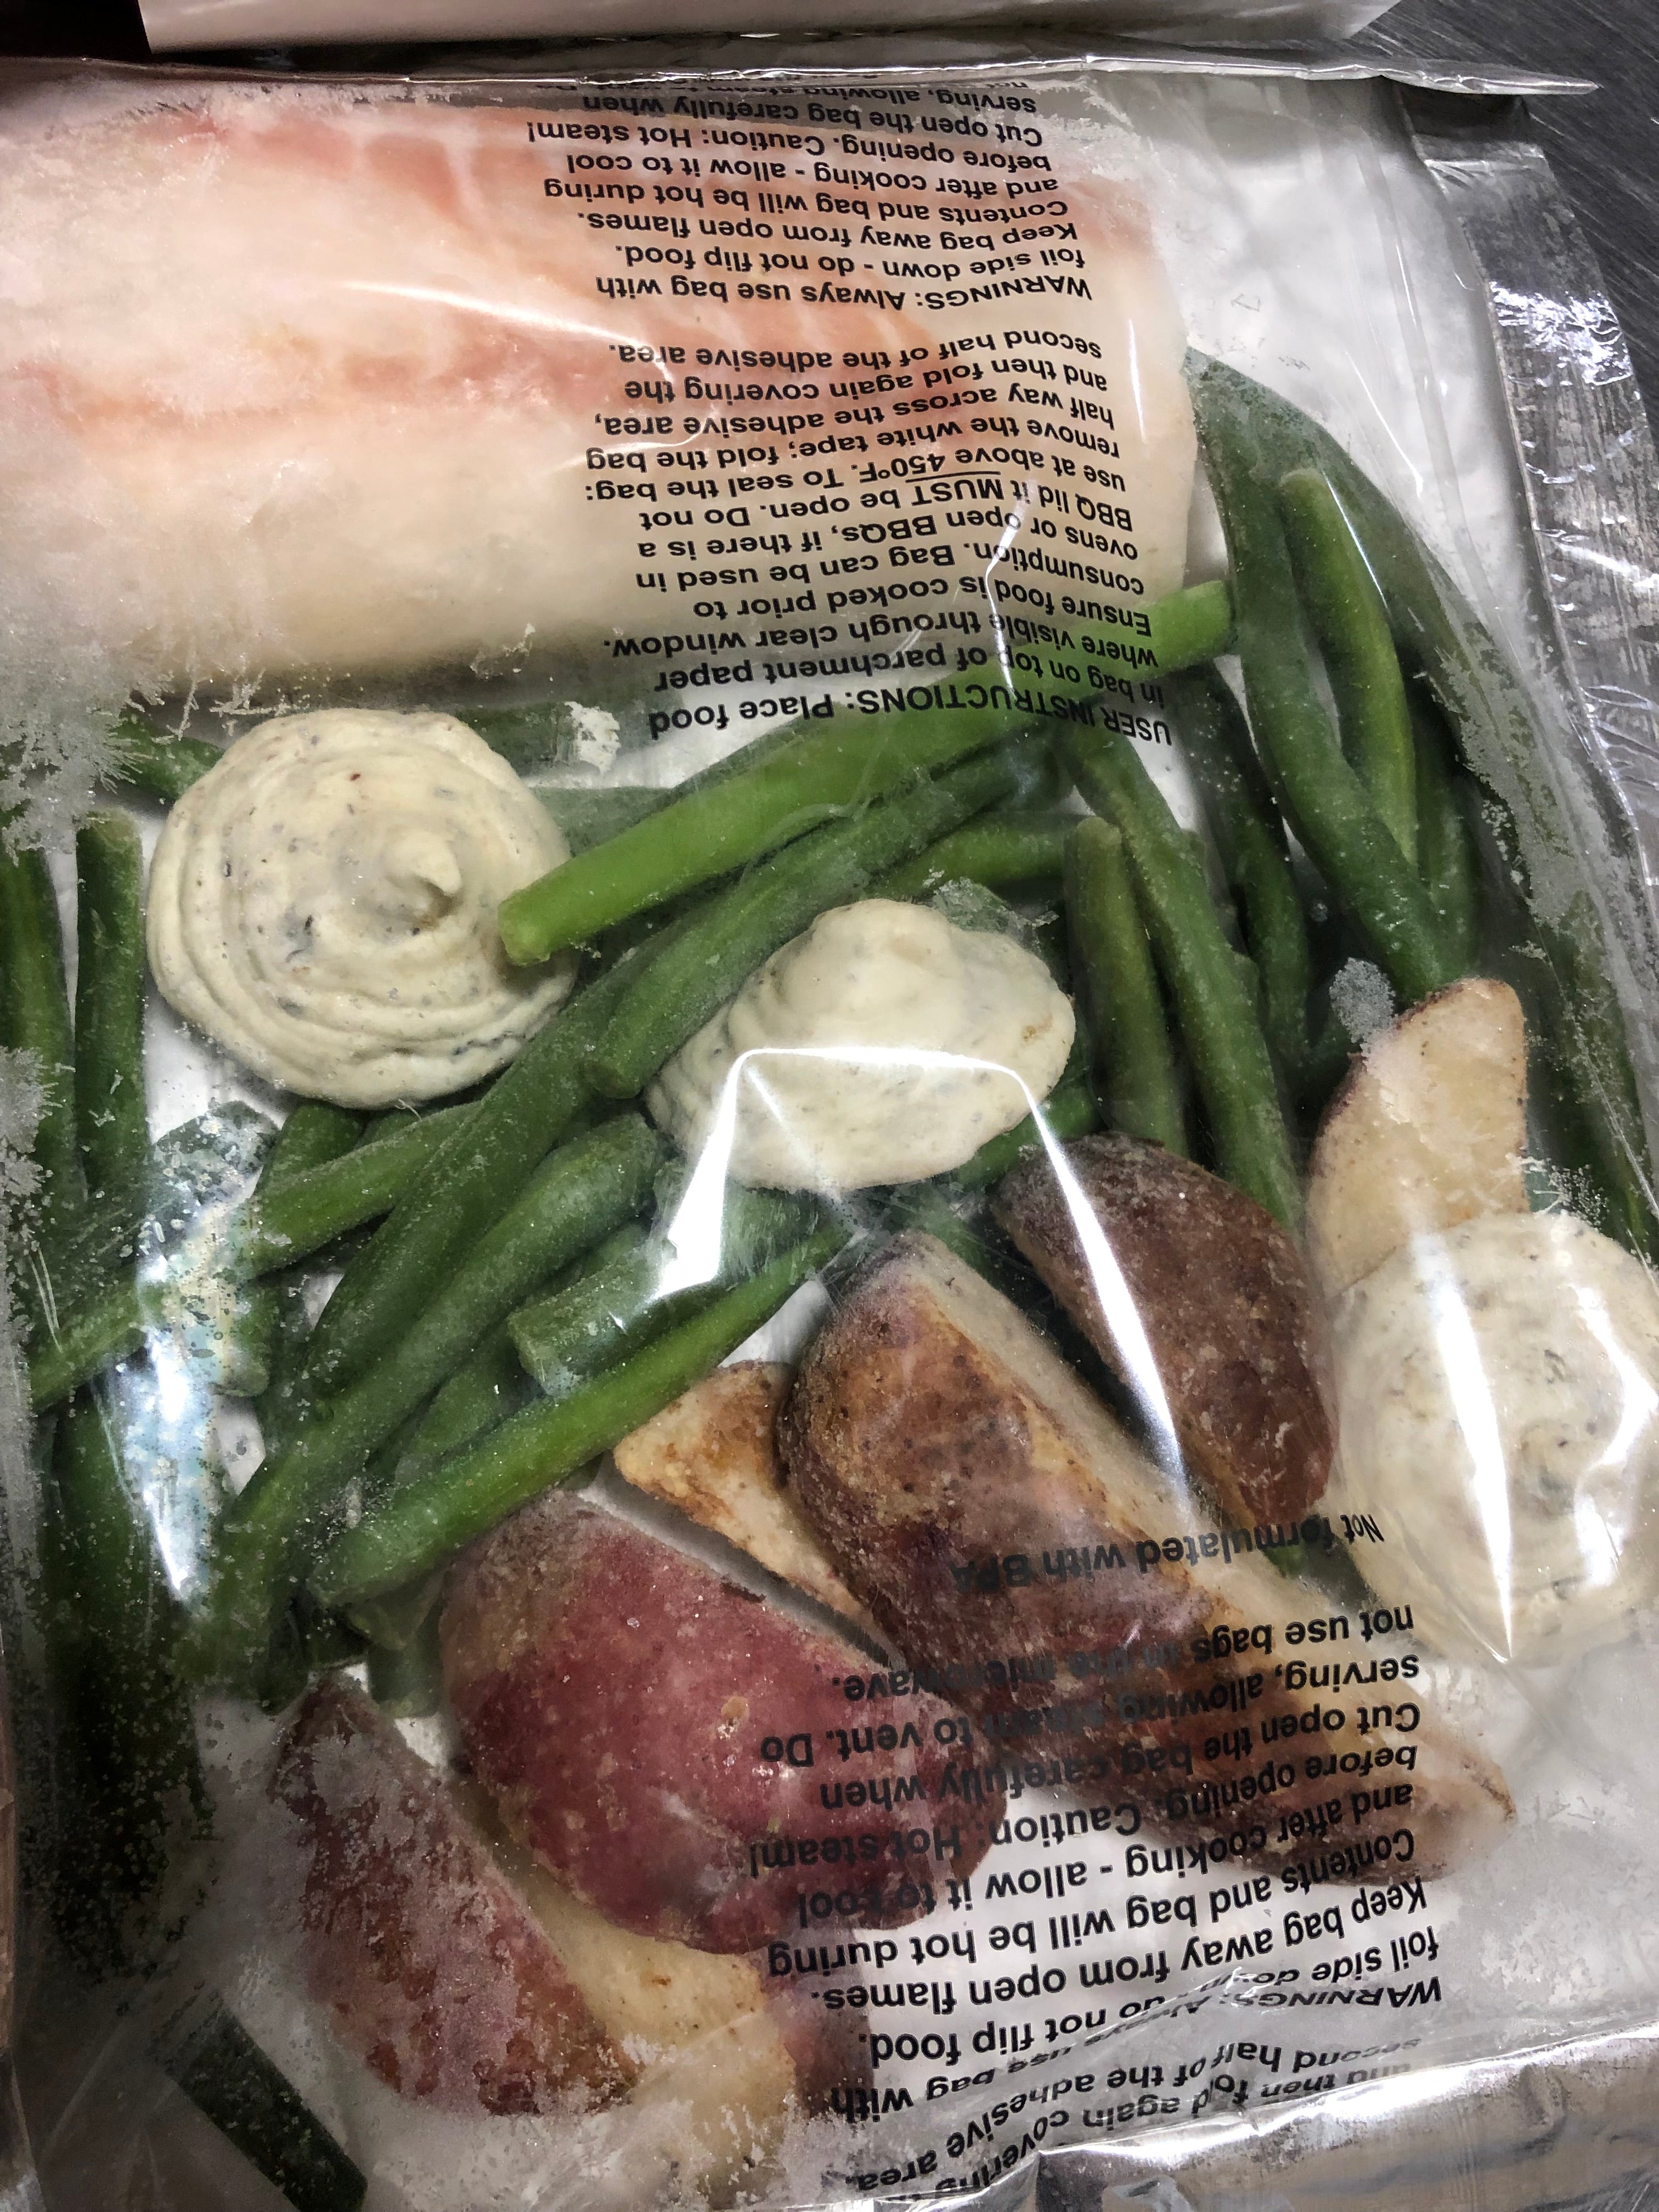 10 Individual Meals - Salmon + Cod Dinner Kit Bundle